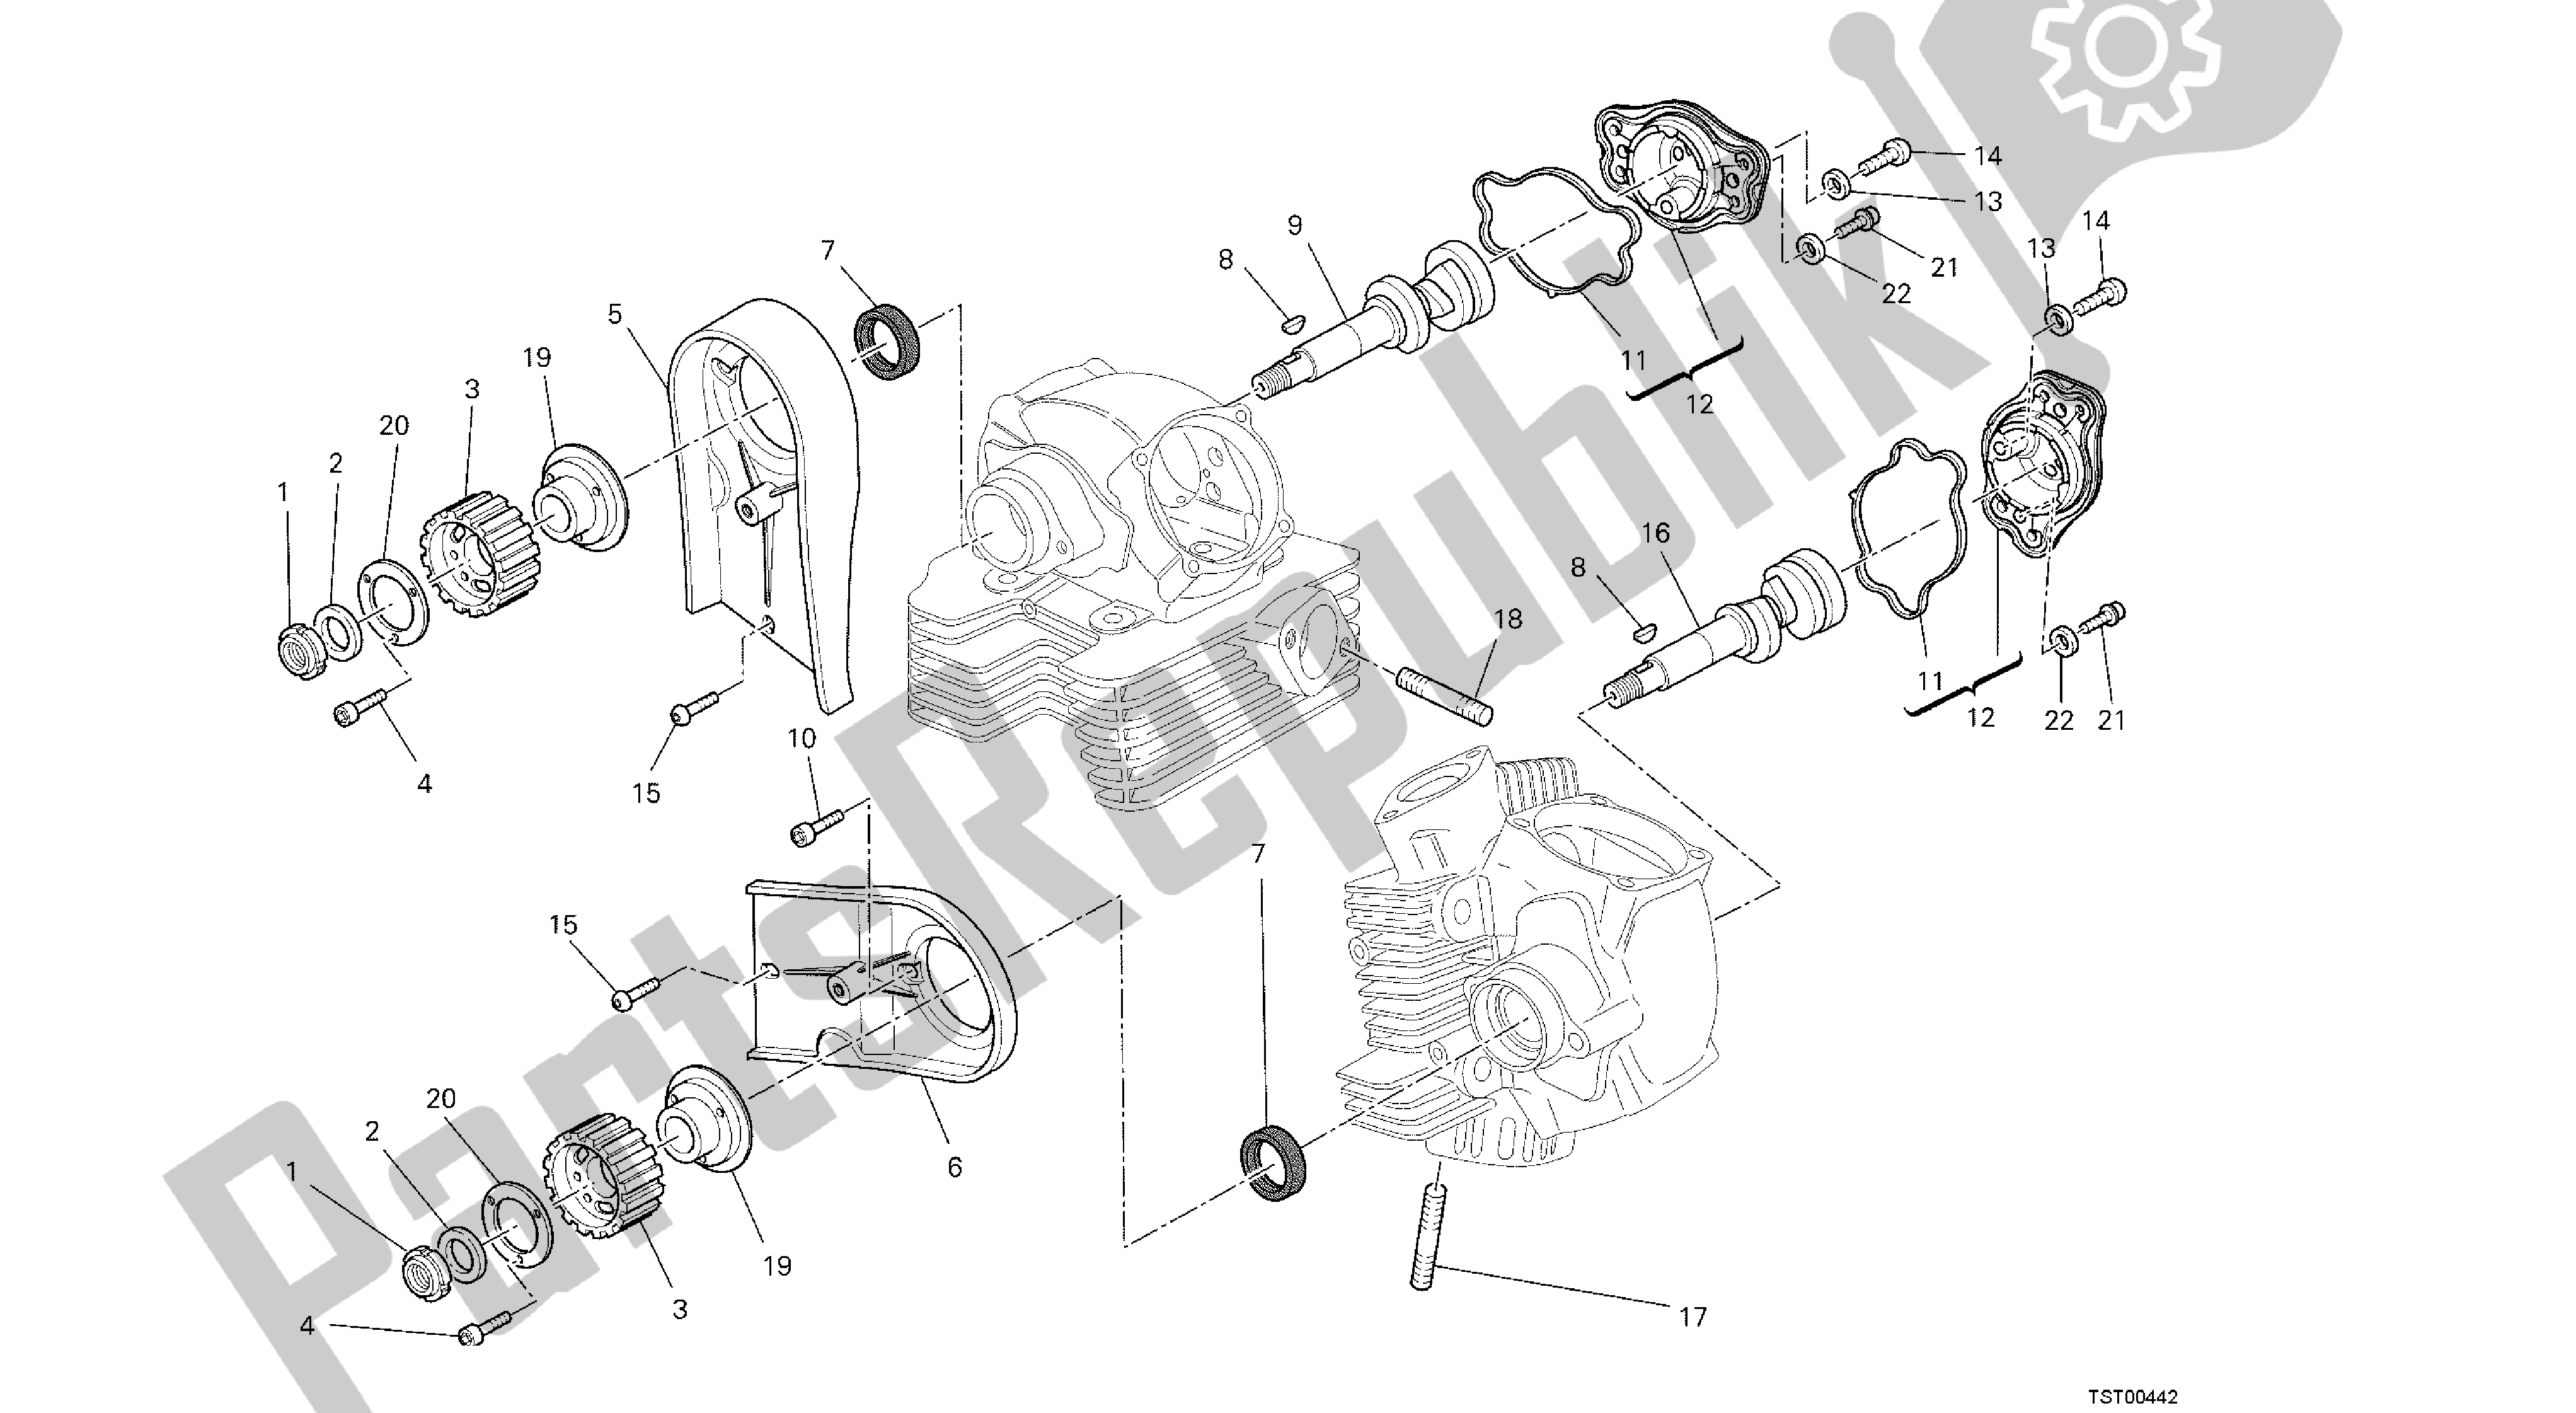 Tutte le parti per il Disegno 013 - Albero A Camme [mod: M796 Abs; Xst: Aus, Bra, Eur, Jap, Twn] Gruppo Motore del Ducati Monster ABS 796 2014